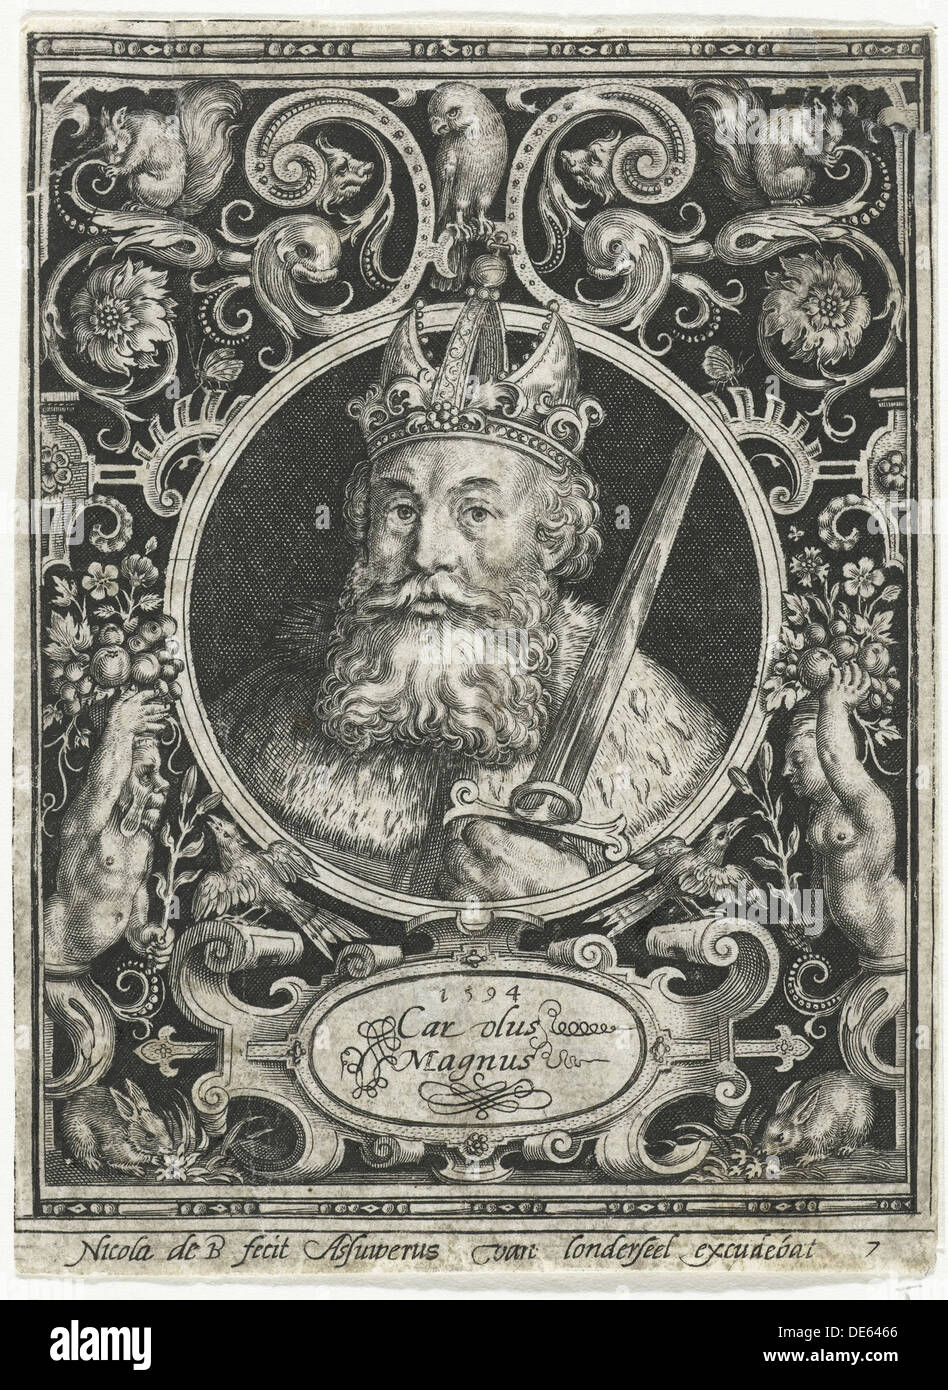 Charles le Grand, Roi des Francs, 1594. Artiste : Nicolaes de Bruyn, (1571-1656) Banque D'Images